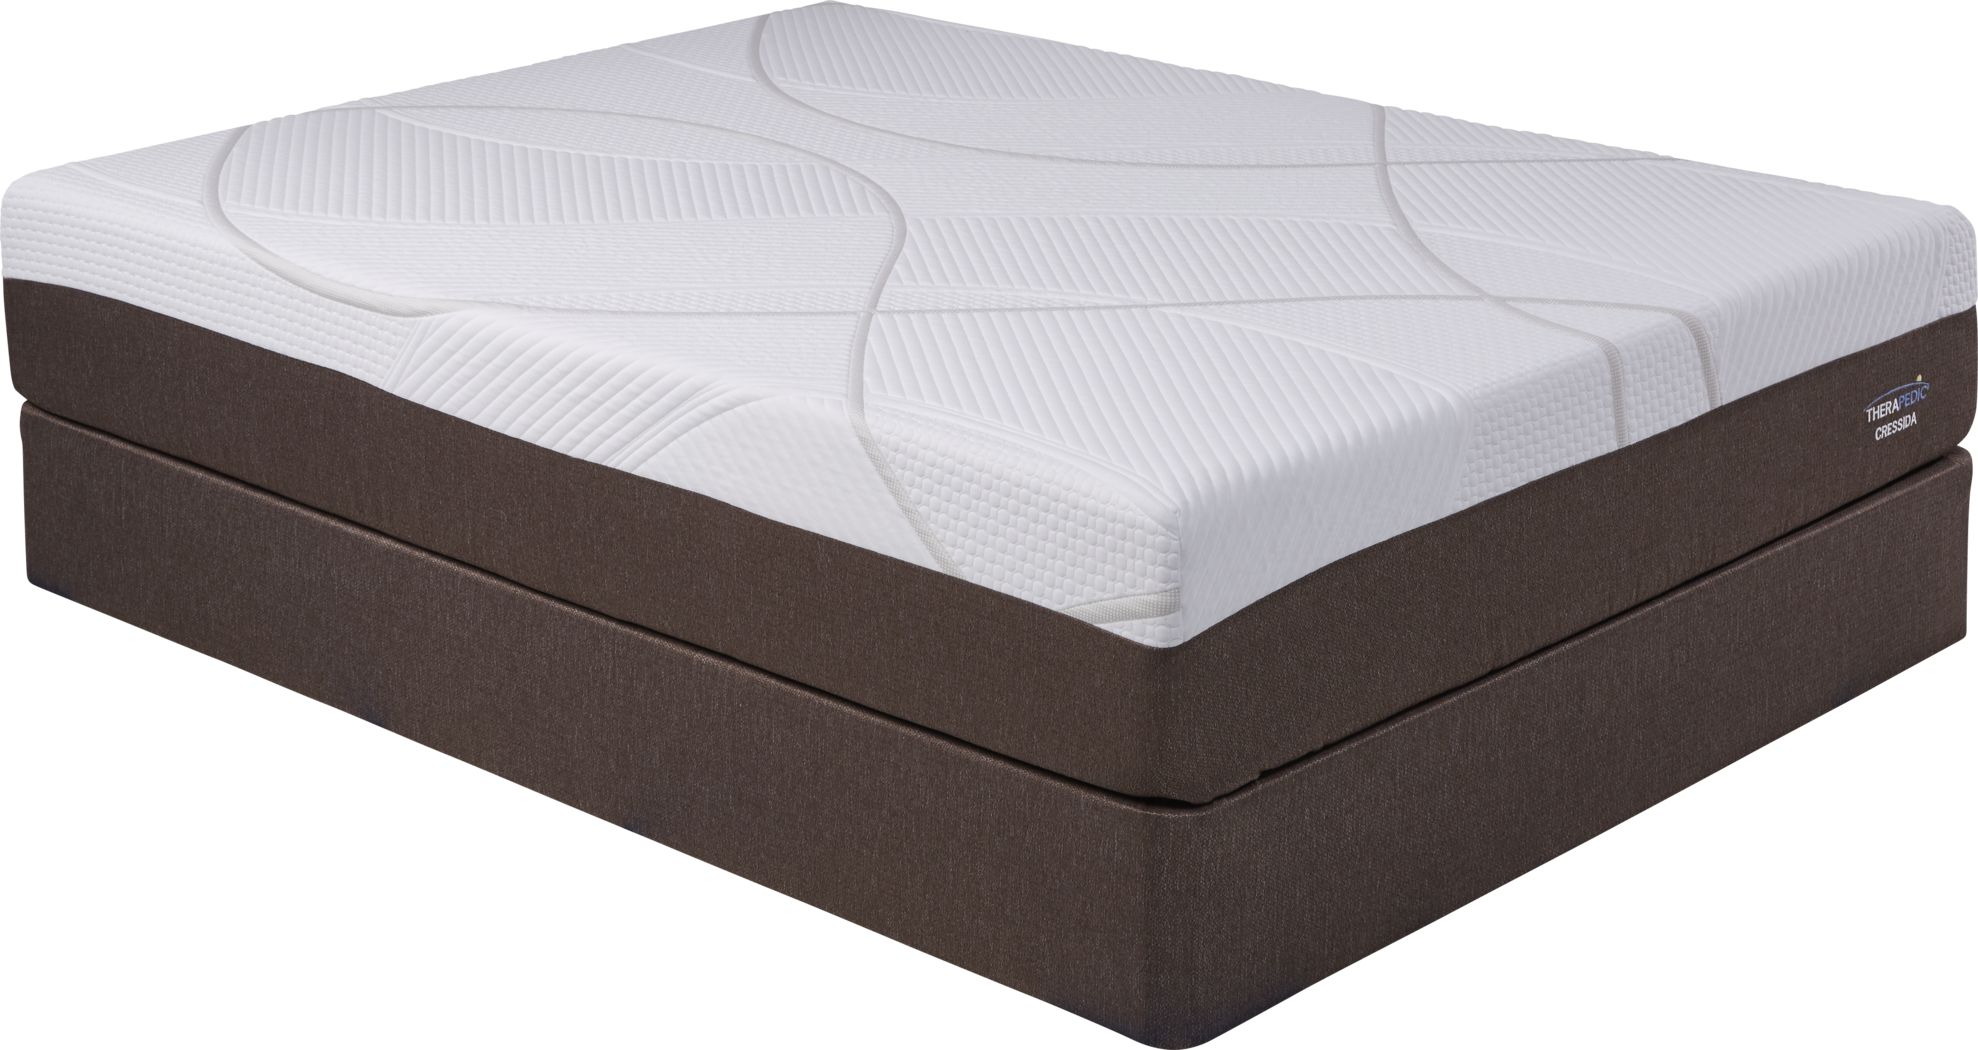 therapedic queen size mattress set